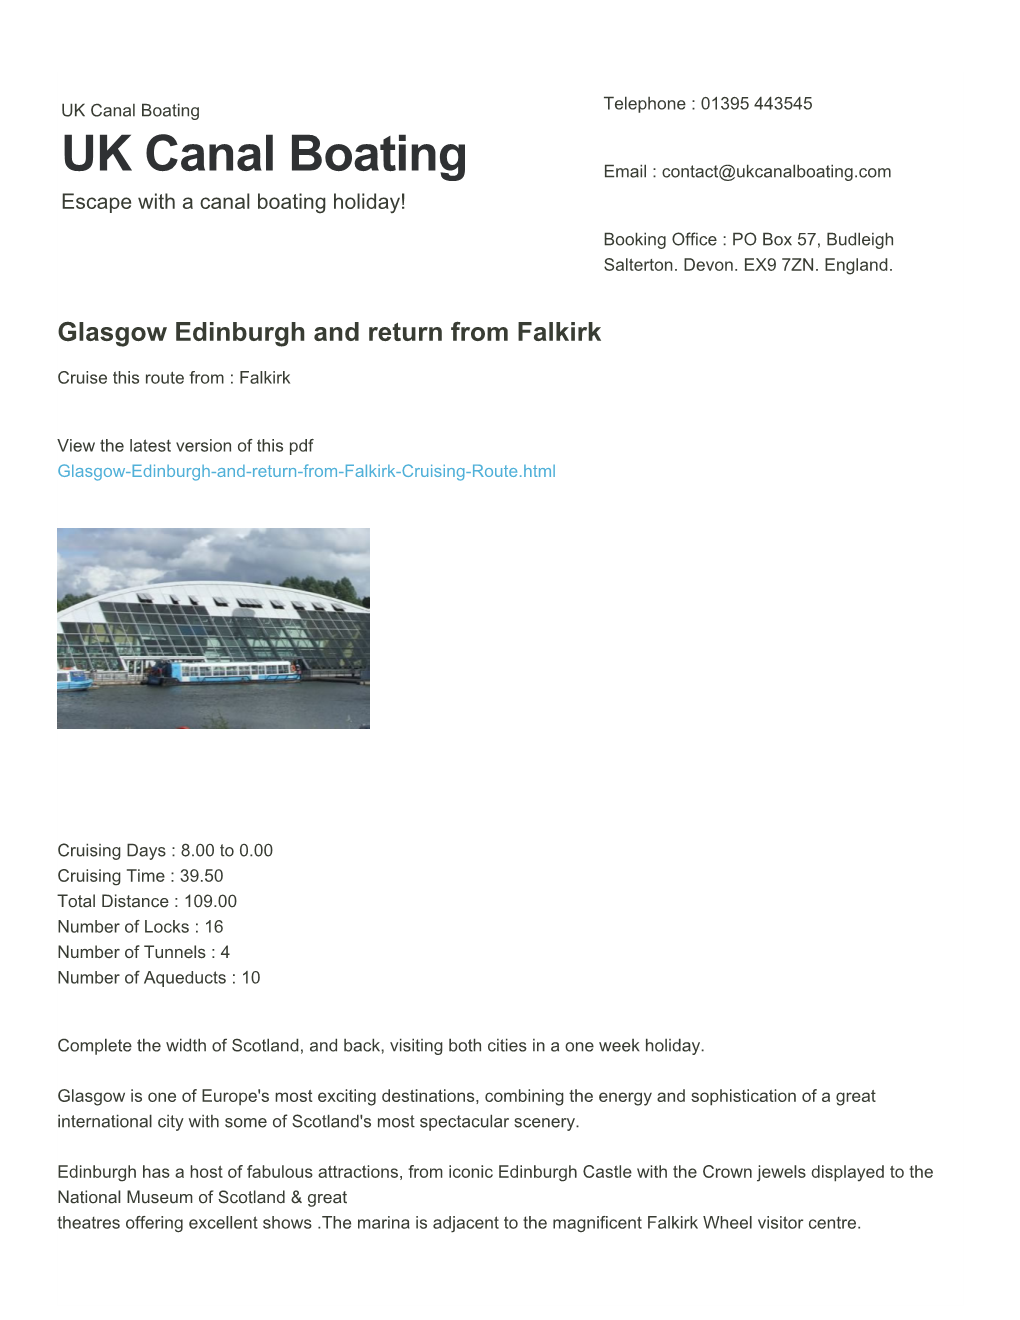 Glasgow Edinburgh and Return from Falkirk | UK Canal Boating